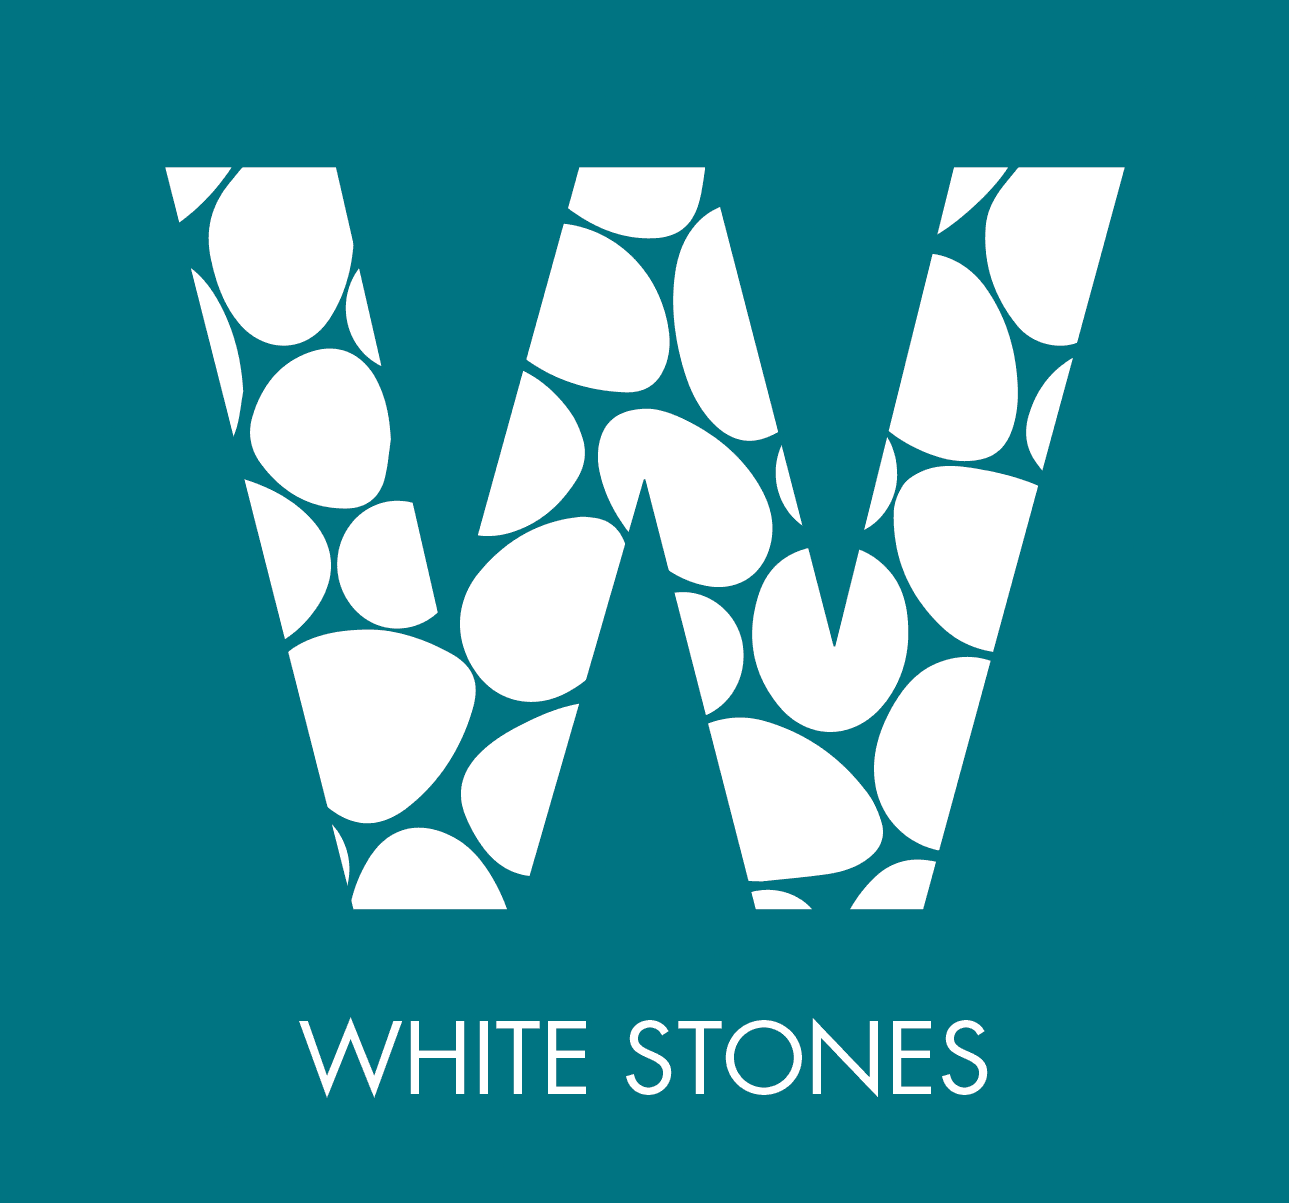 White Stones studios and art cafe gallery Portland Dorset